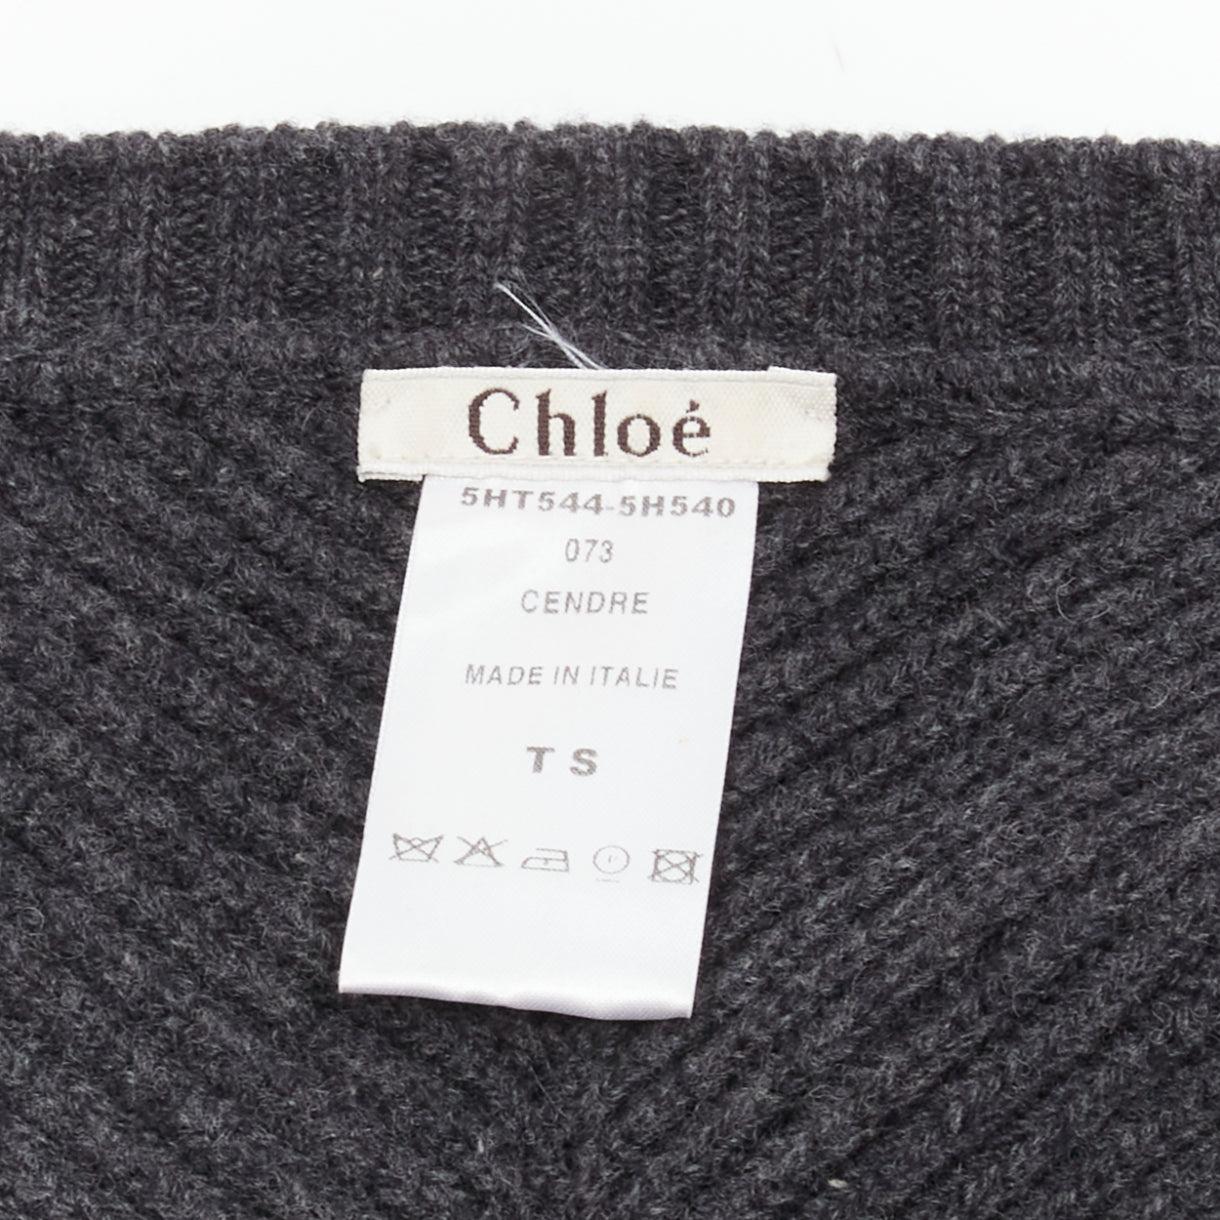 CHLOE Stella McCartney Vintage wool burgundy military trim cropped cardigan S For Sale 5